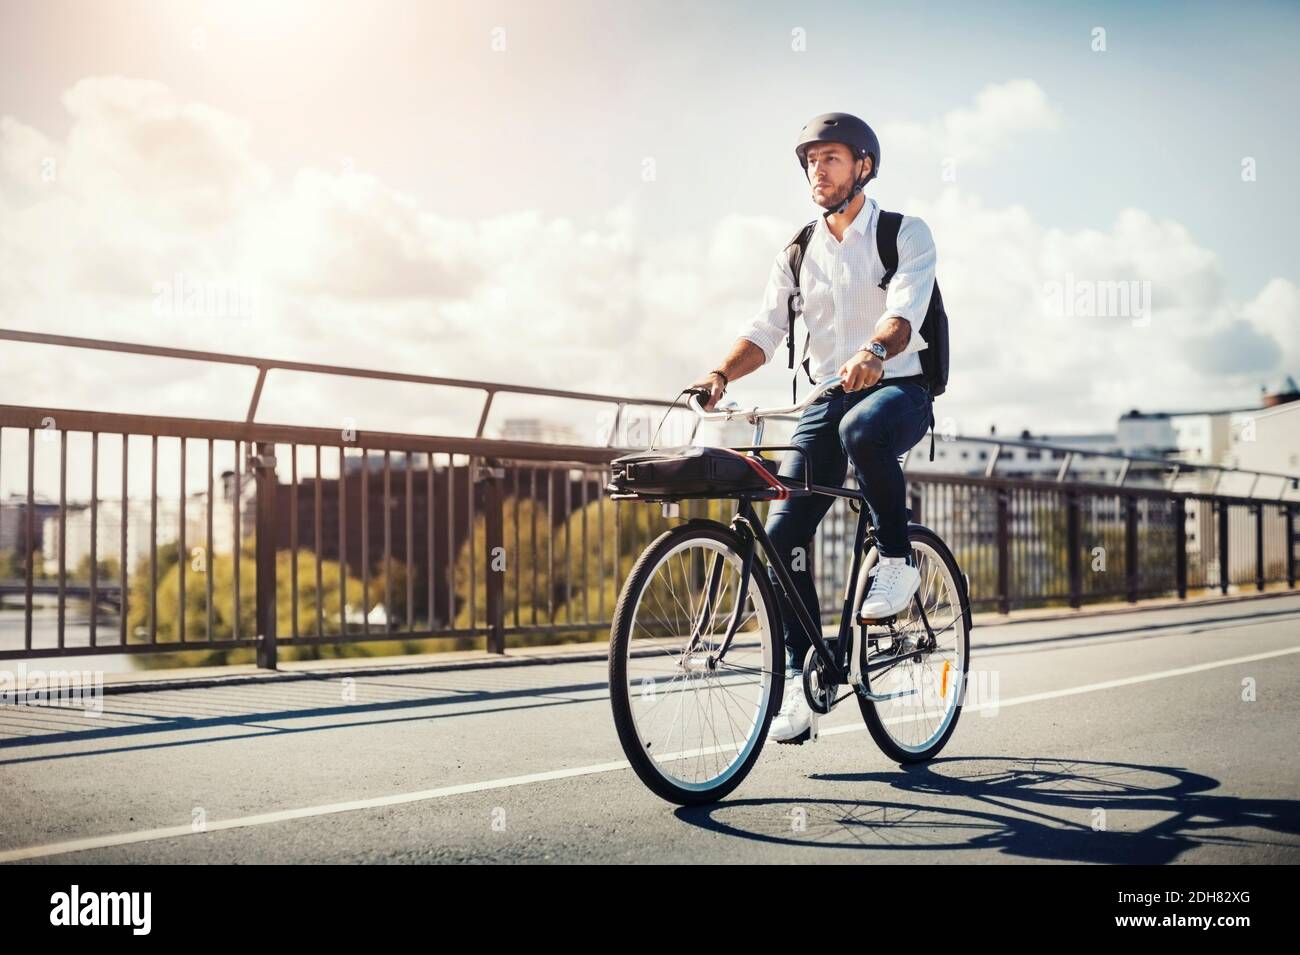 Businessman riding bicycle on bridge against sky Stock Photo